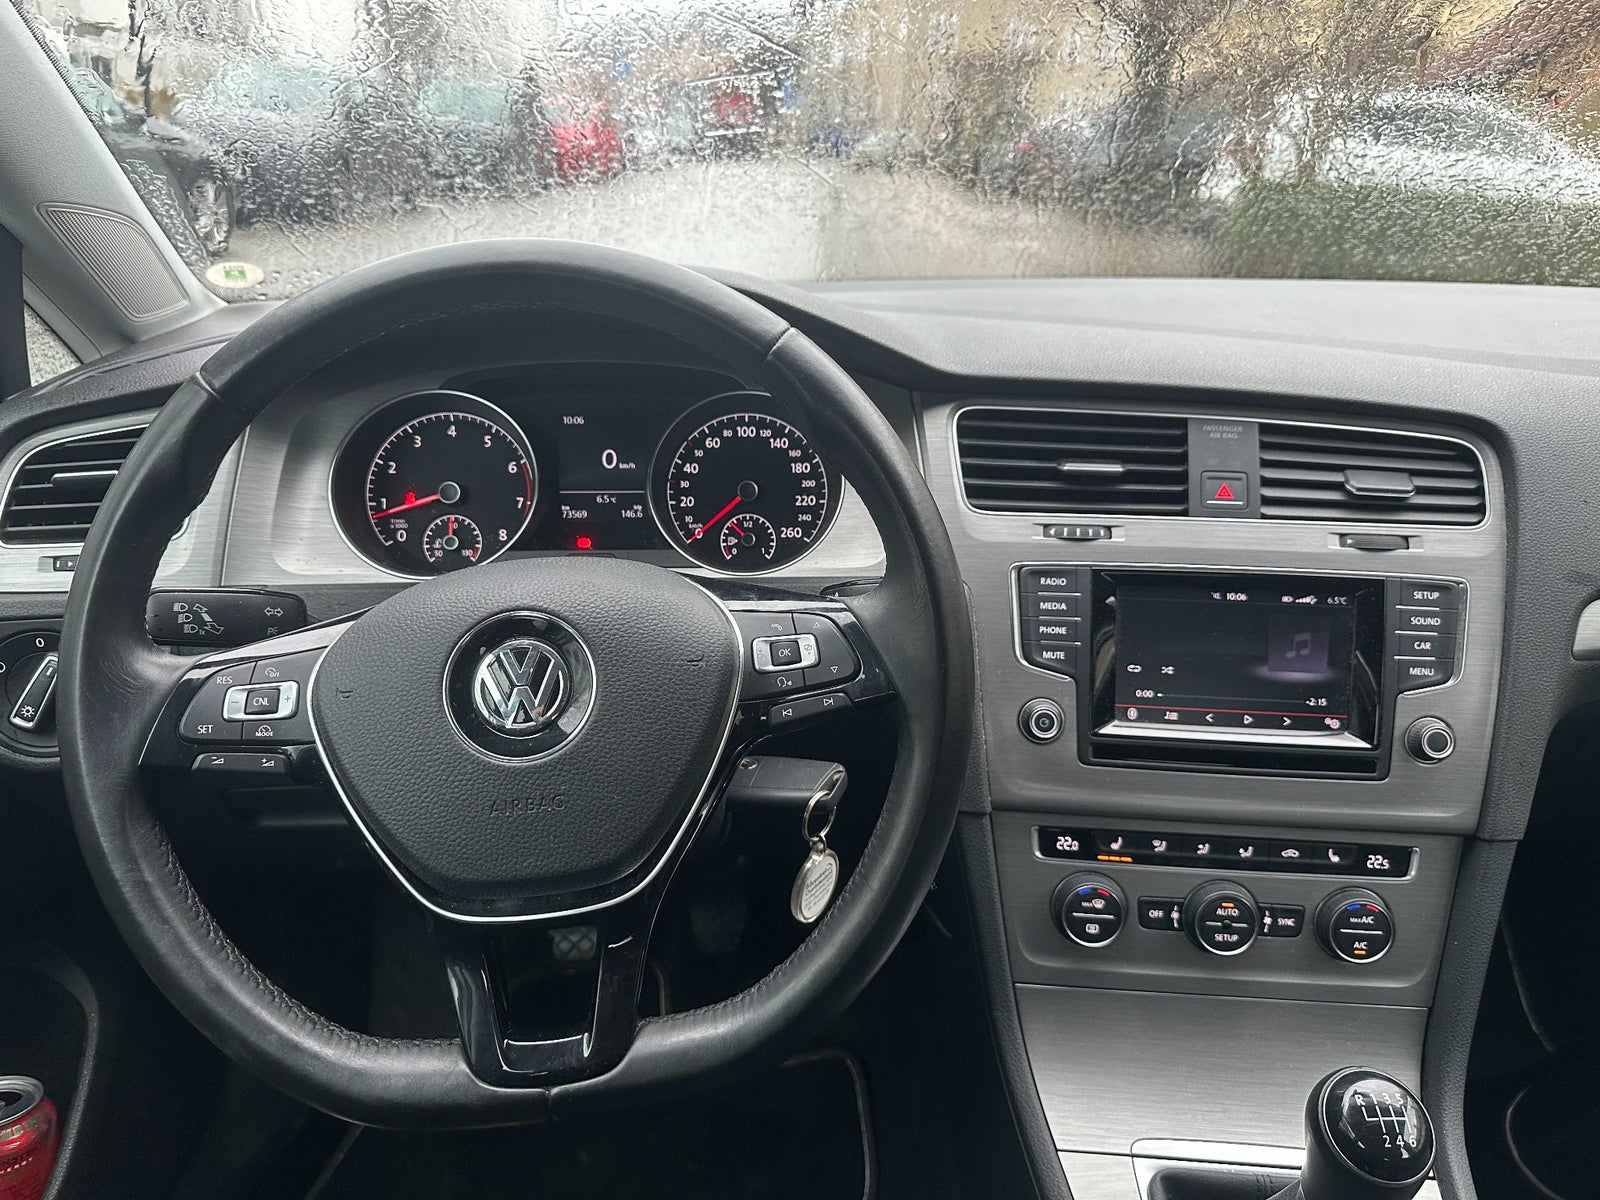 VW Golf VII 1,4 TSi 122 Comfortline BMT Benzin modelår 2014